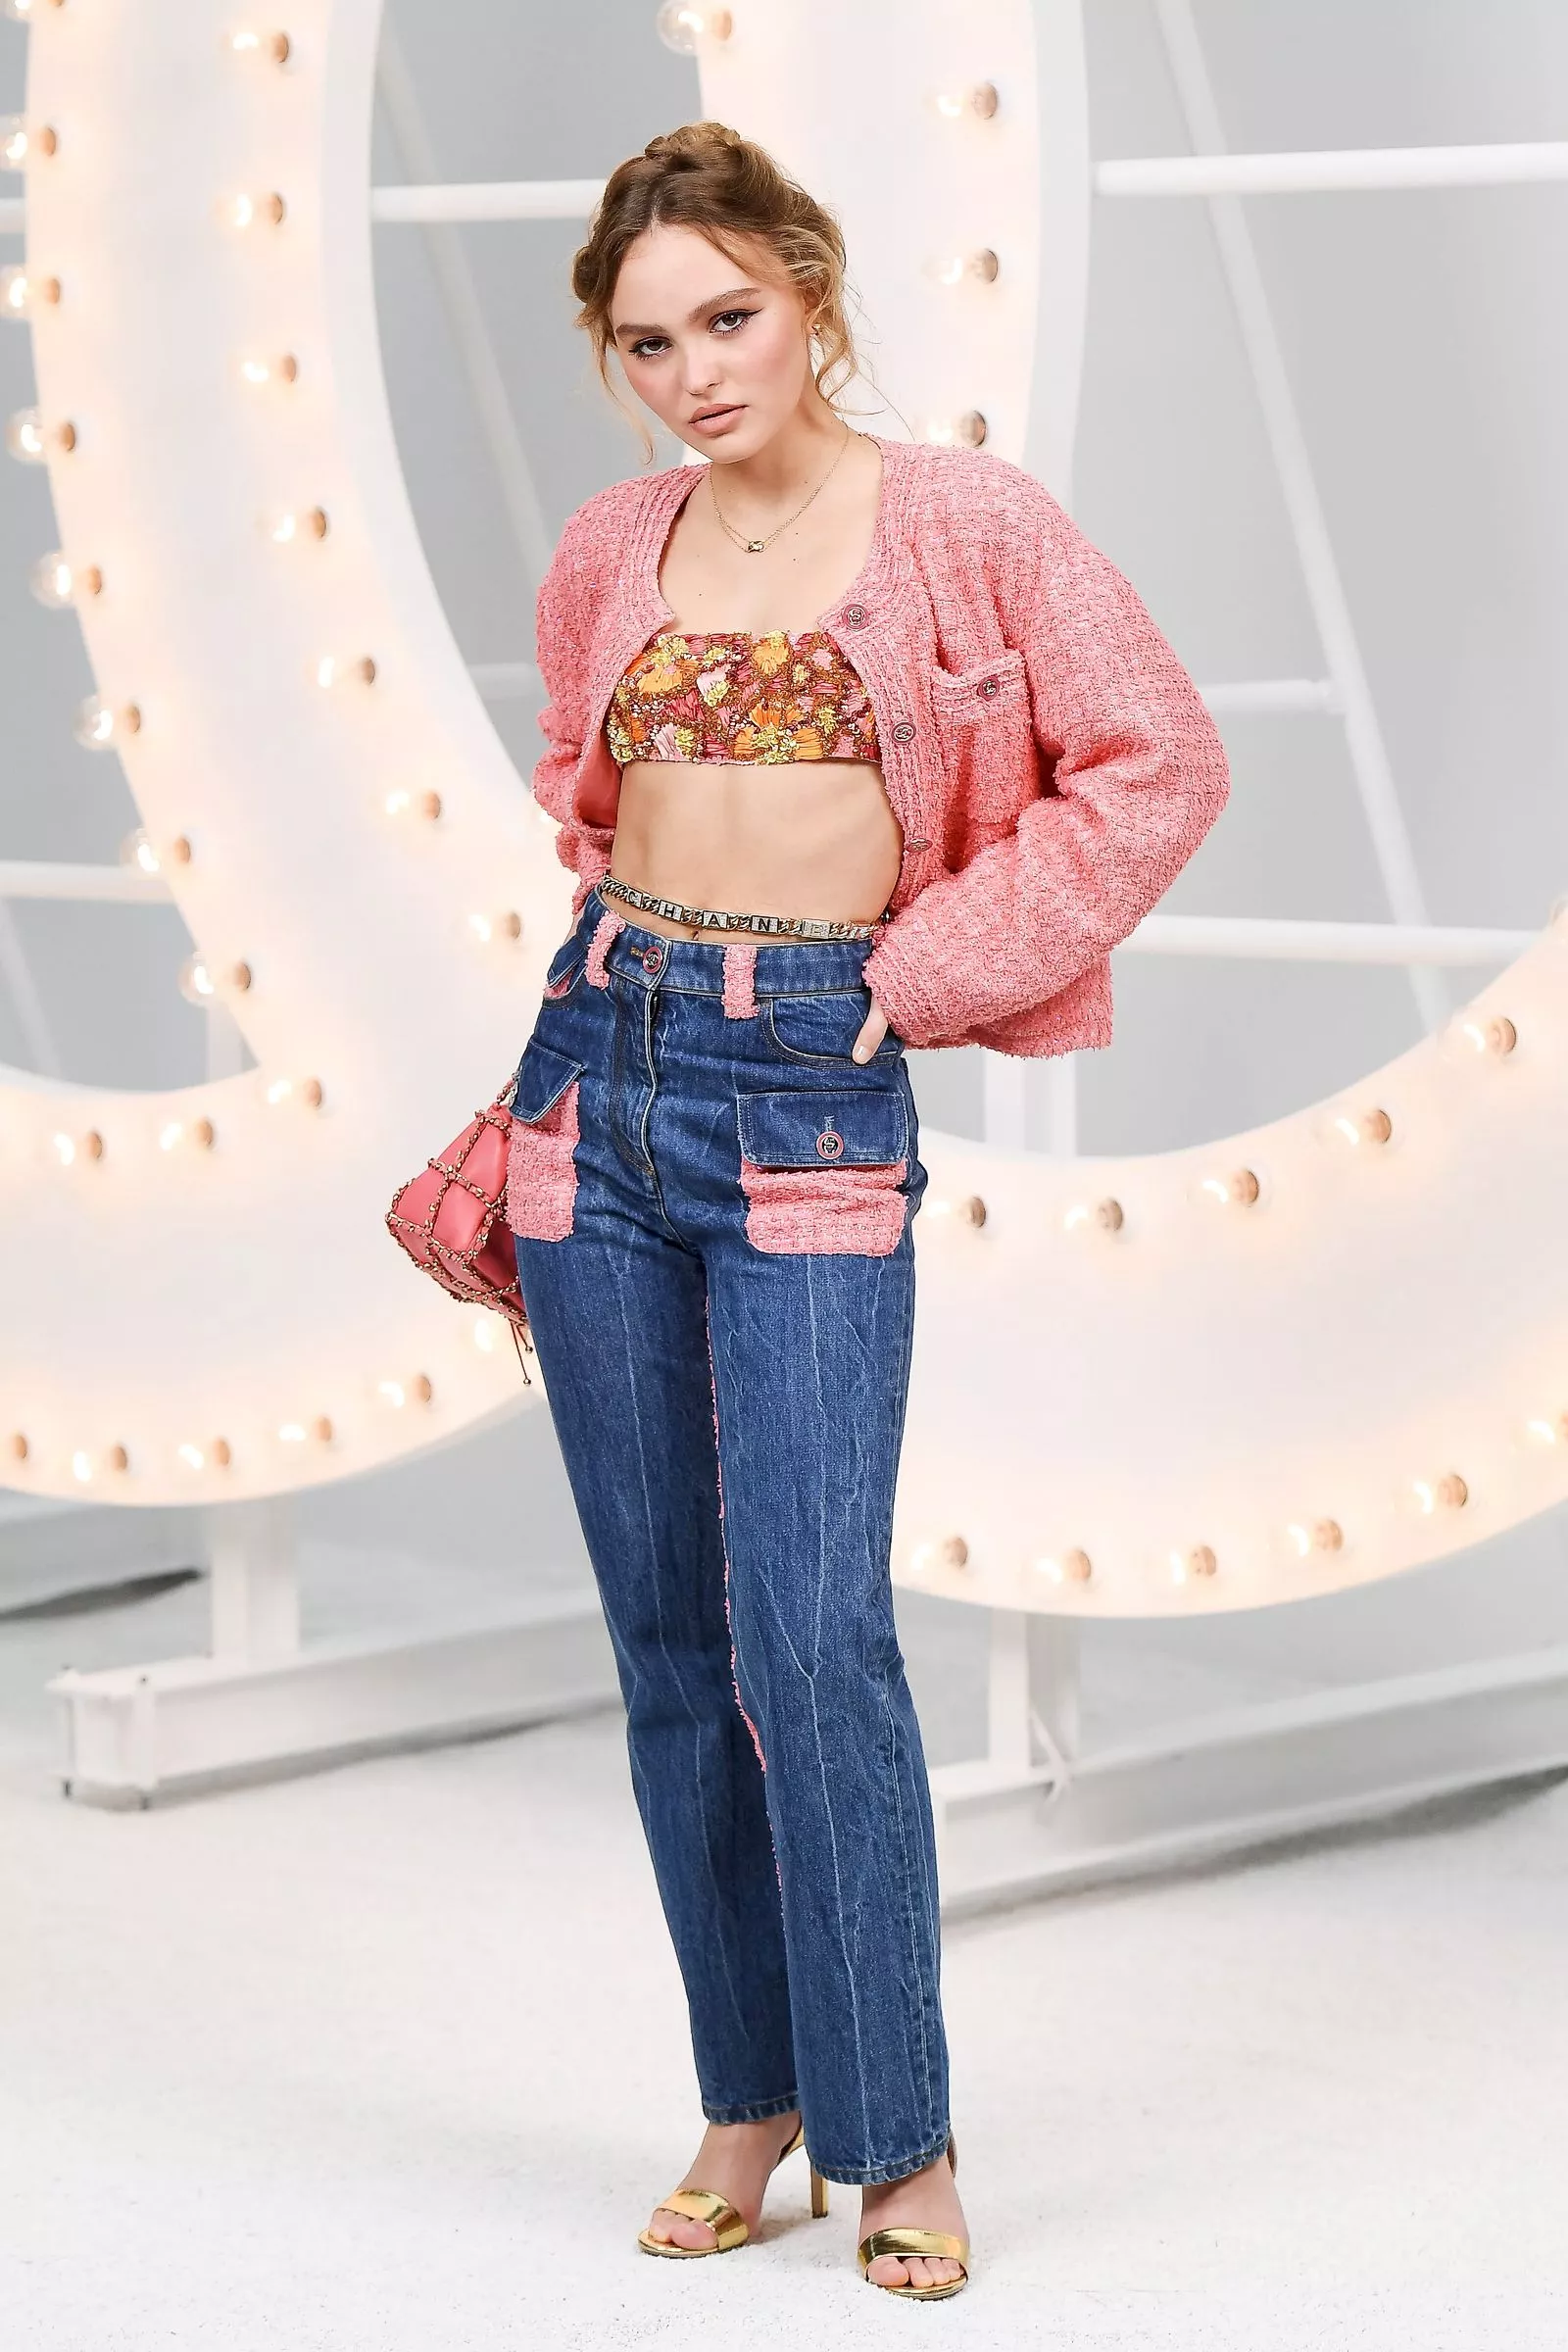 Лили-Роуз Депп на шоу Chanel 2020